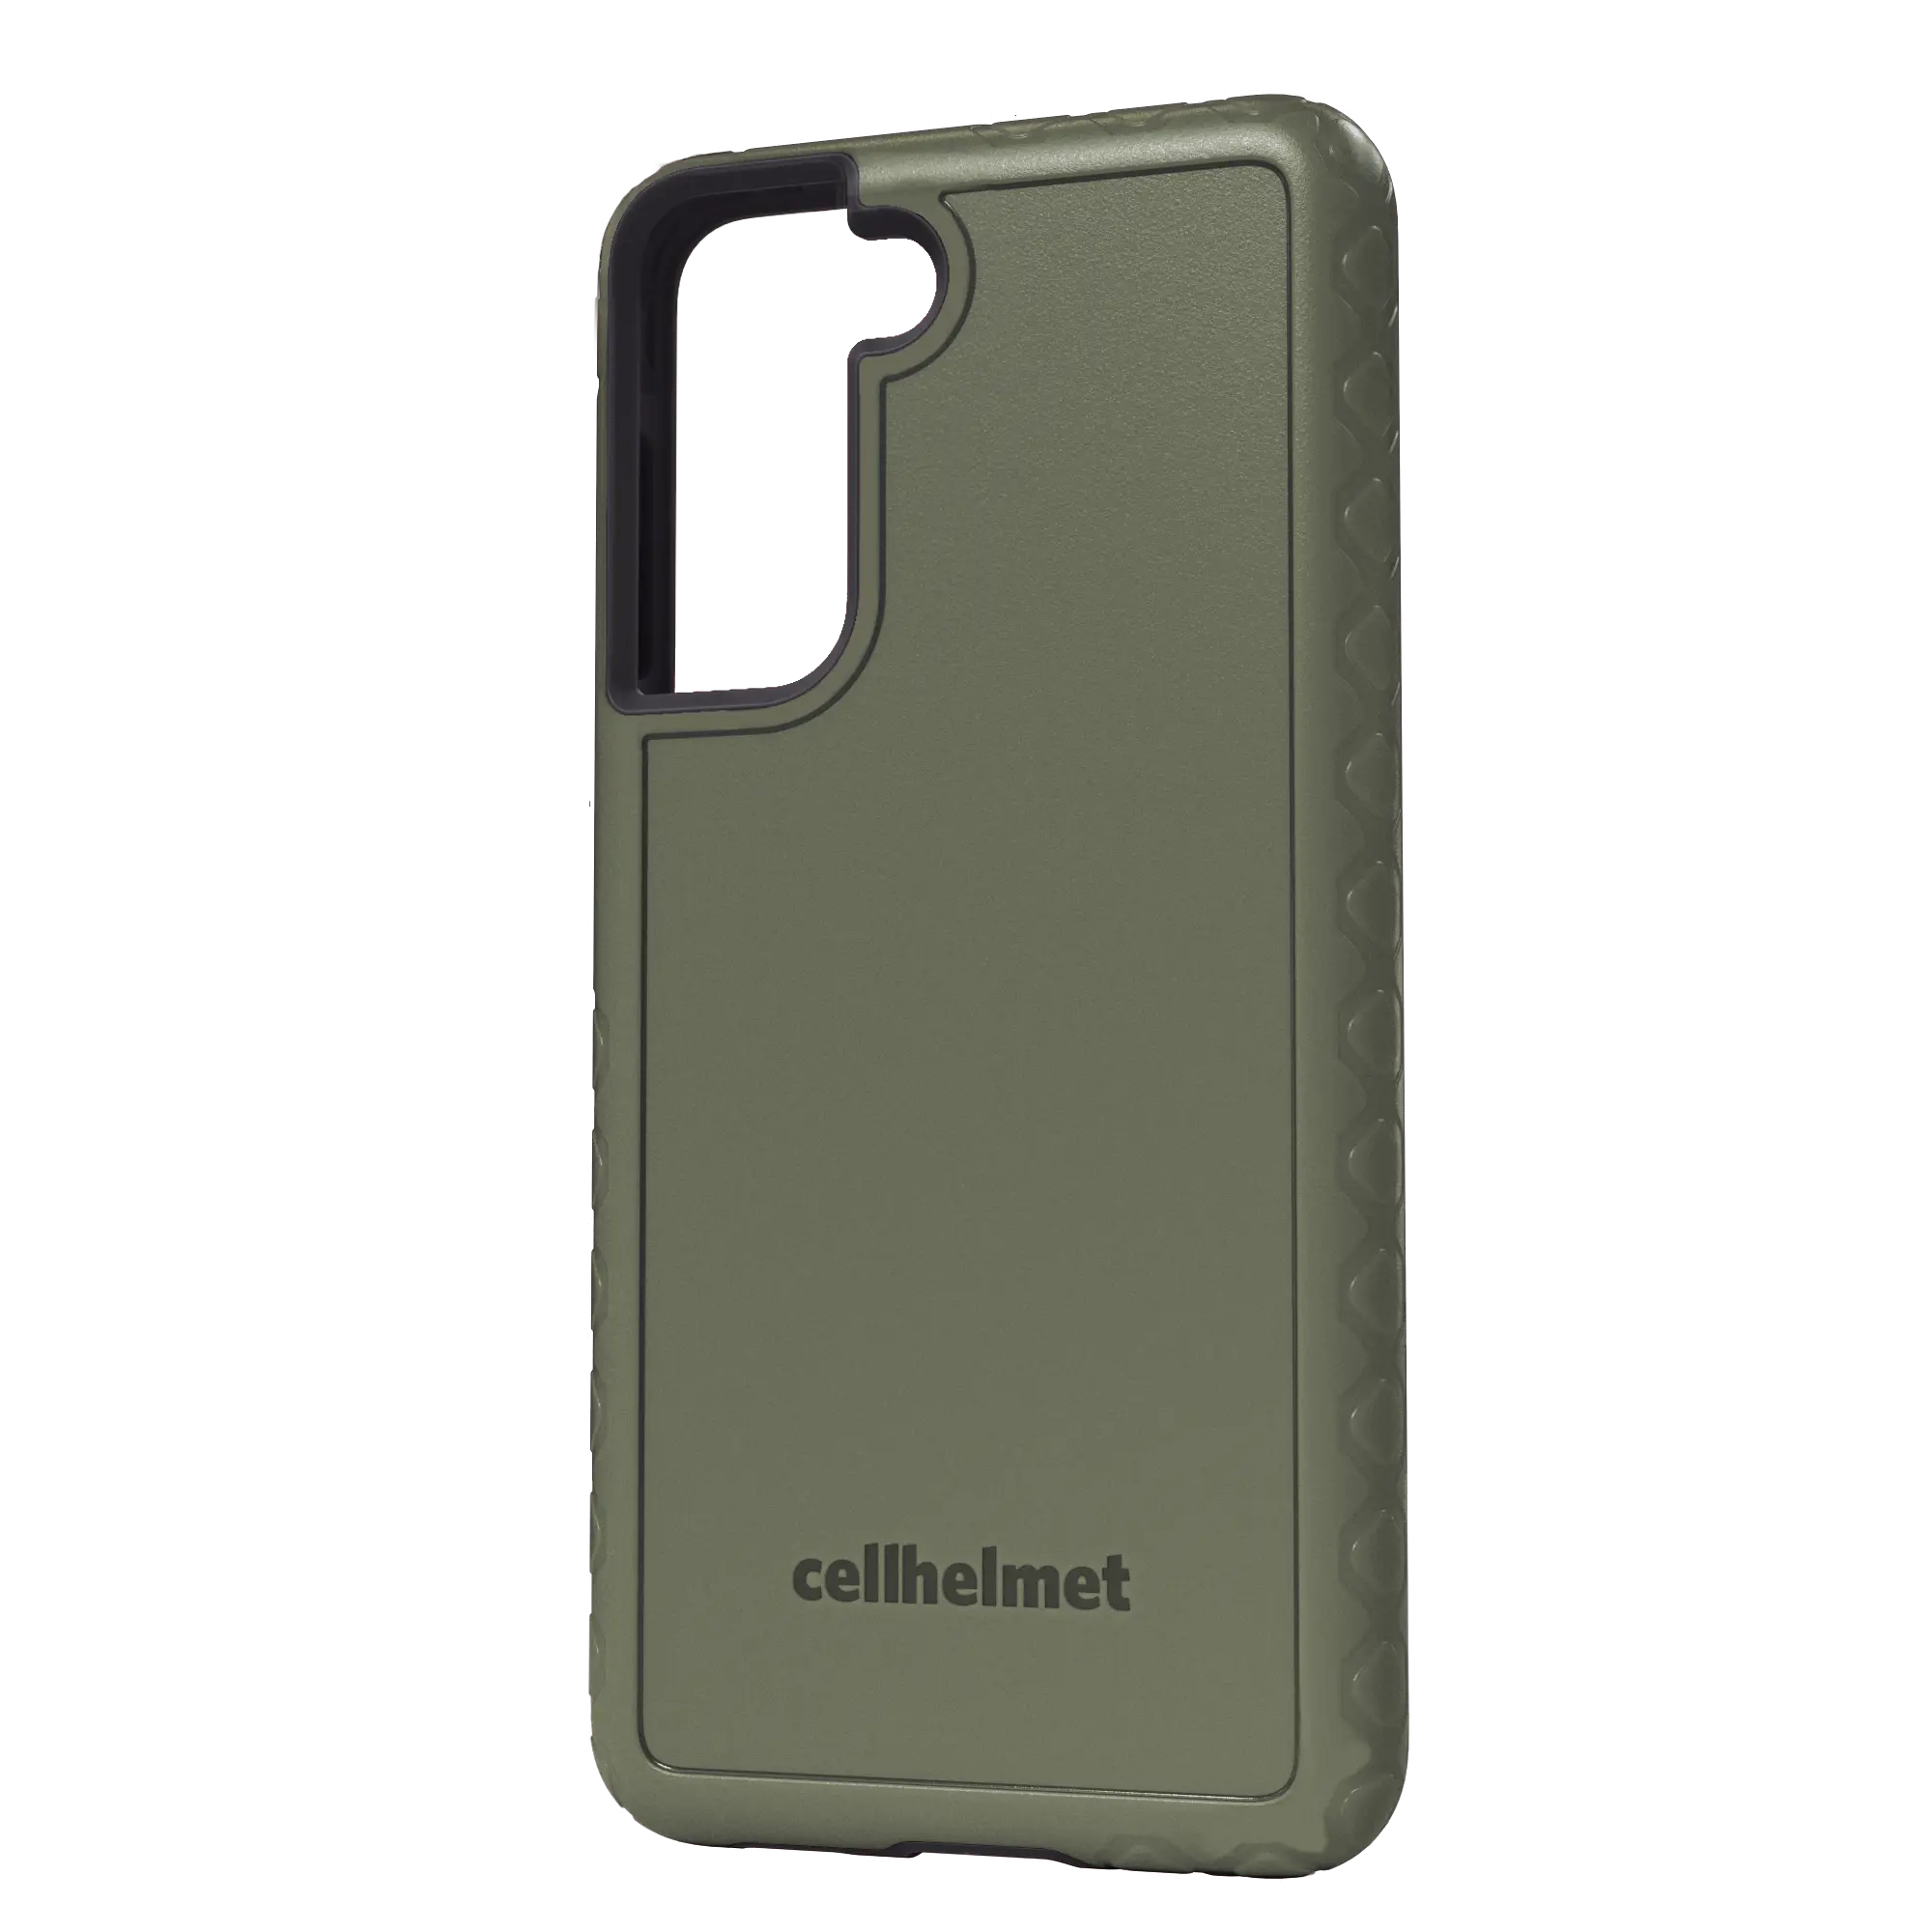 OD Green cellhelmet Custom Printed Case for Galaxy S21